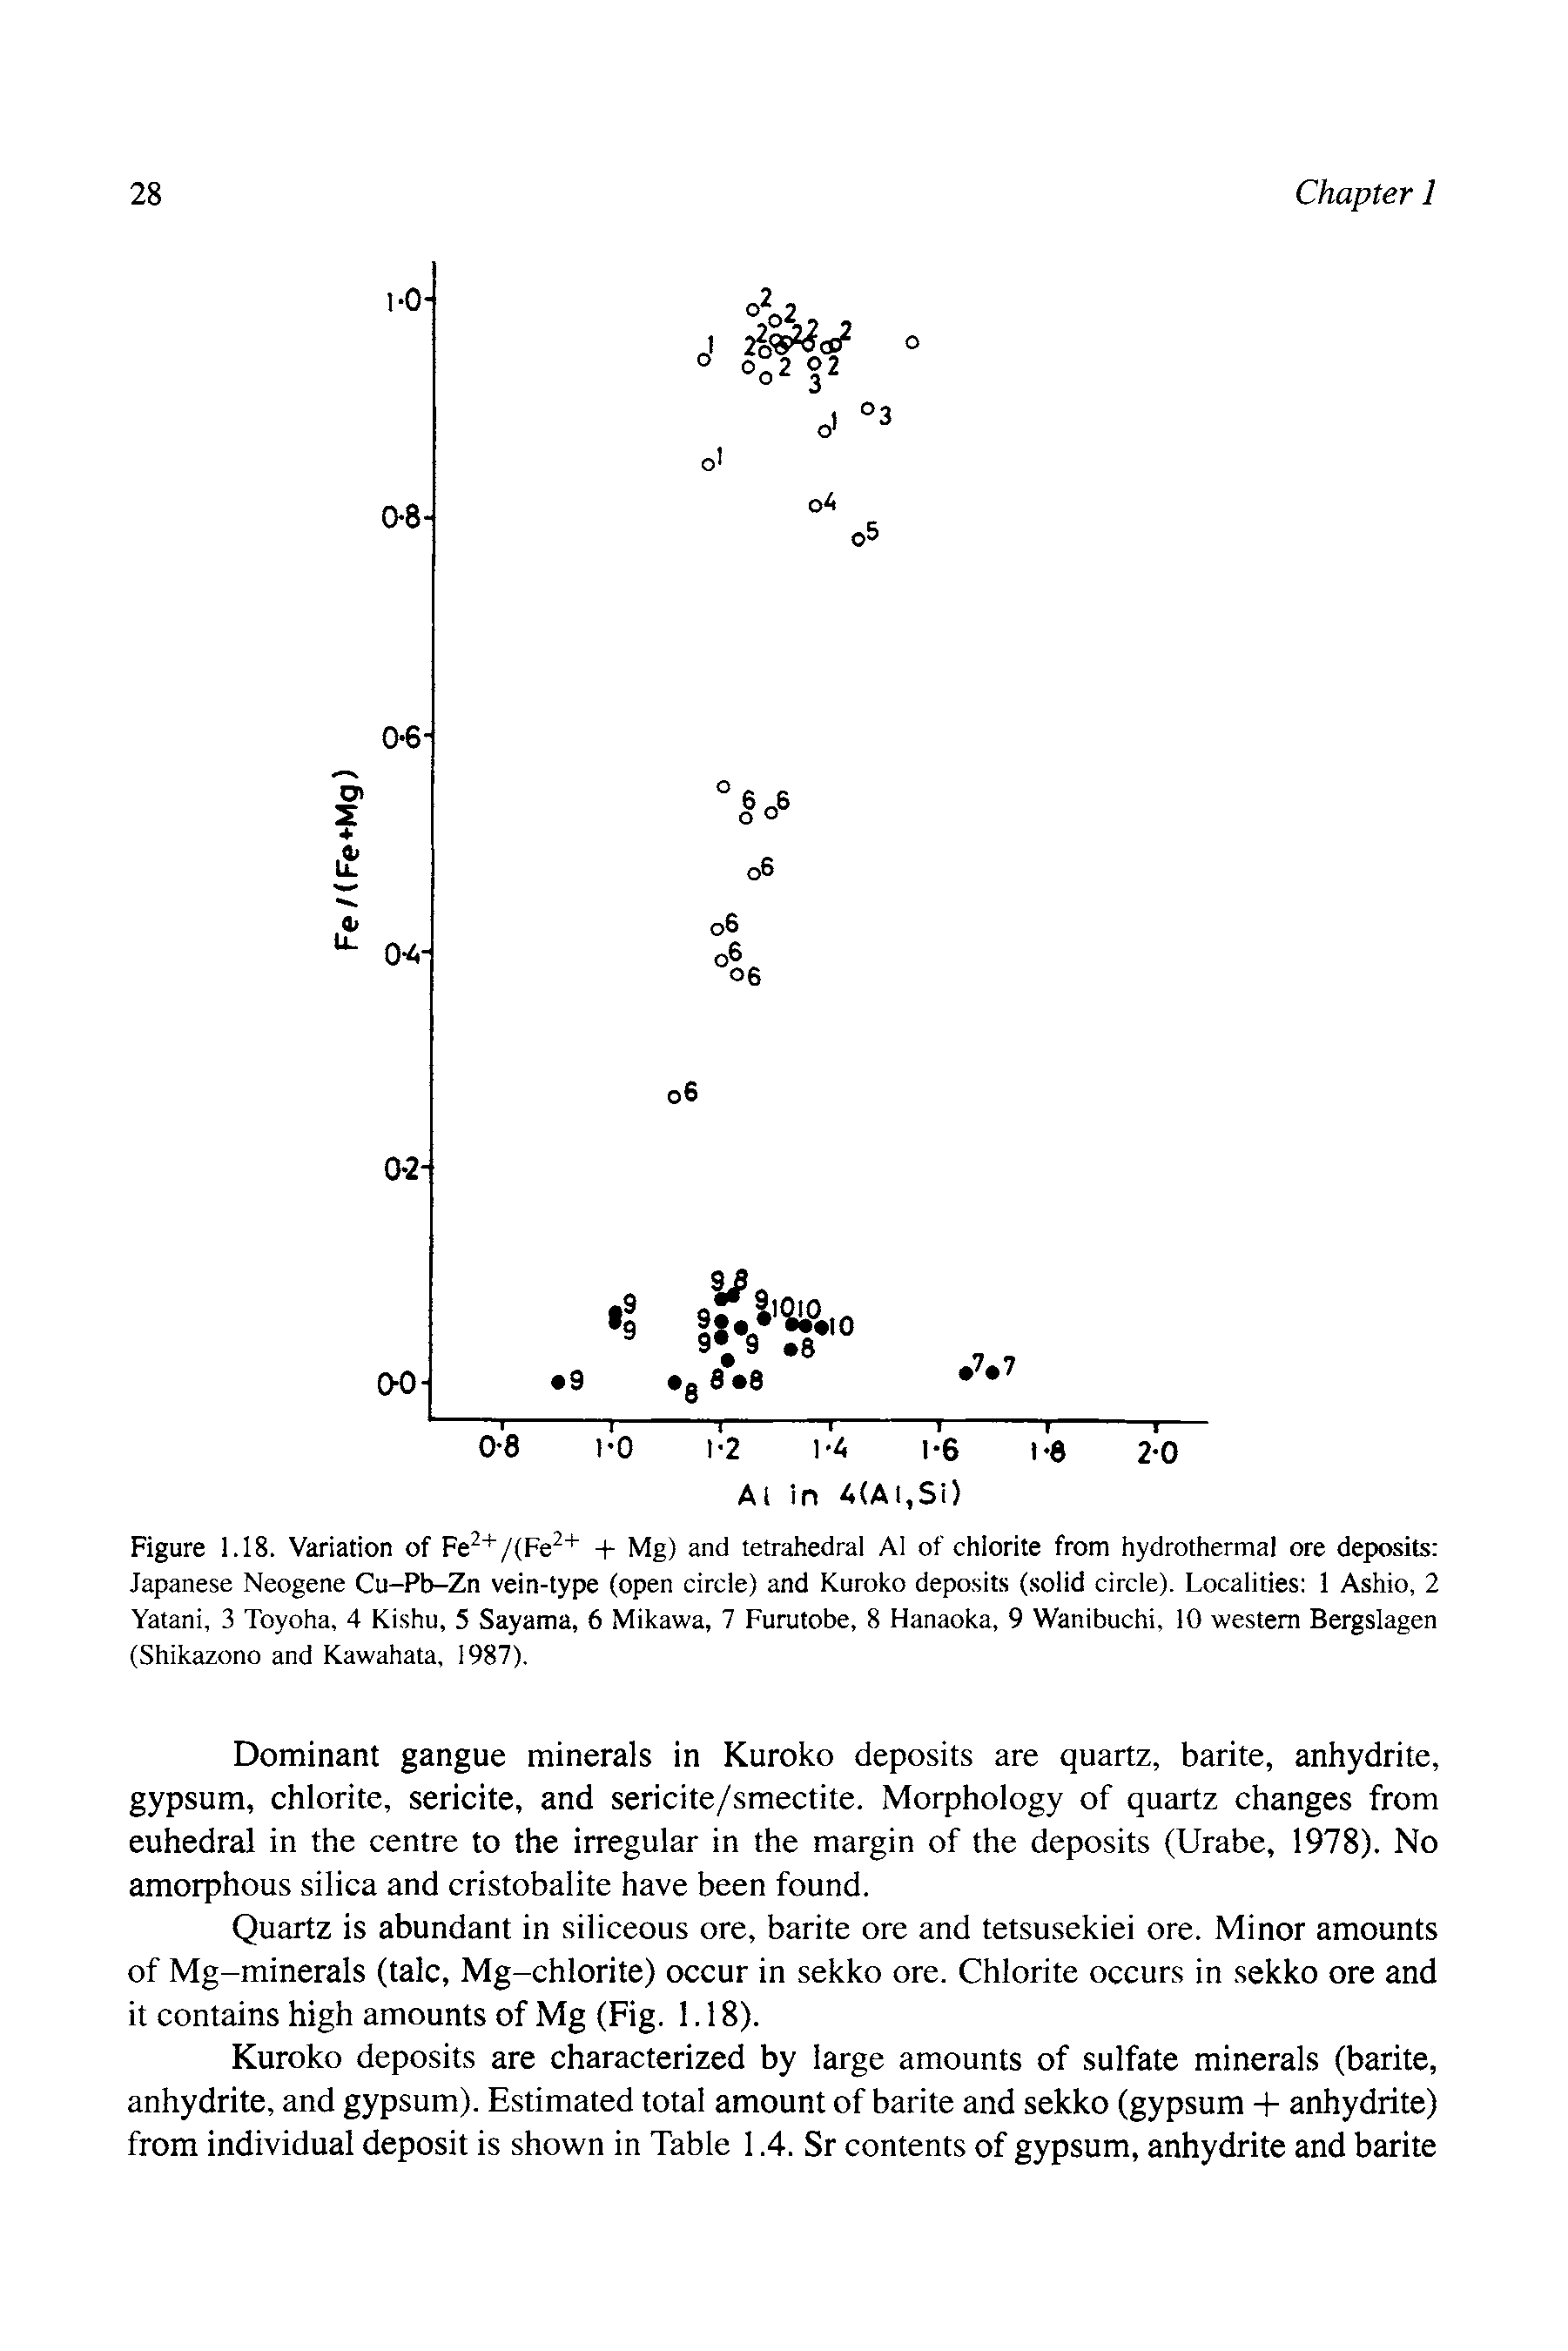 Figure 1.18. Variation of Fe " /(Fe + Mg) and tetrahedral AI of chlorite from hydrothermal ore deposits Japanese Neogene Cu-Pb-Zn vein-type (open circle) and Kuroko deposits (solid circle). Localities 1 Ashio, 2 Yatani, 3 Toyoha, 4 Kishu, 5 Sayama, 6 Mikawa, 7 Furutobe, 8 Hanaoka, 9 Wanibuchi, 10 western Bergslagen (Shikazono and Kawahata, 1987).